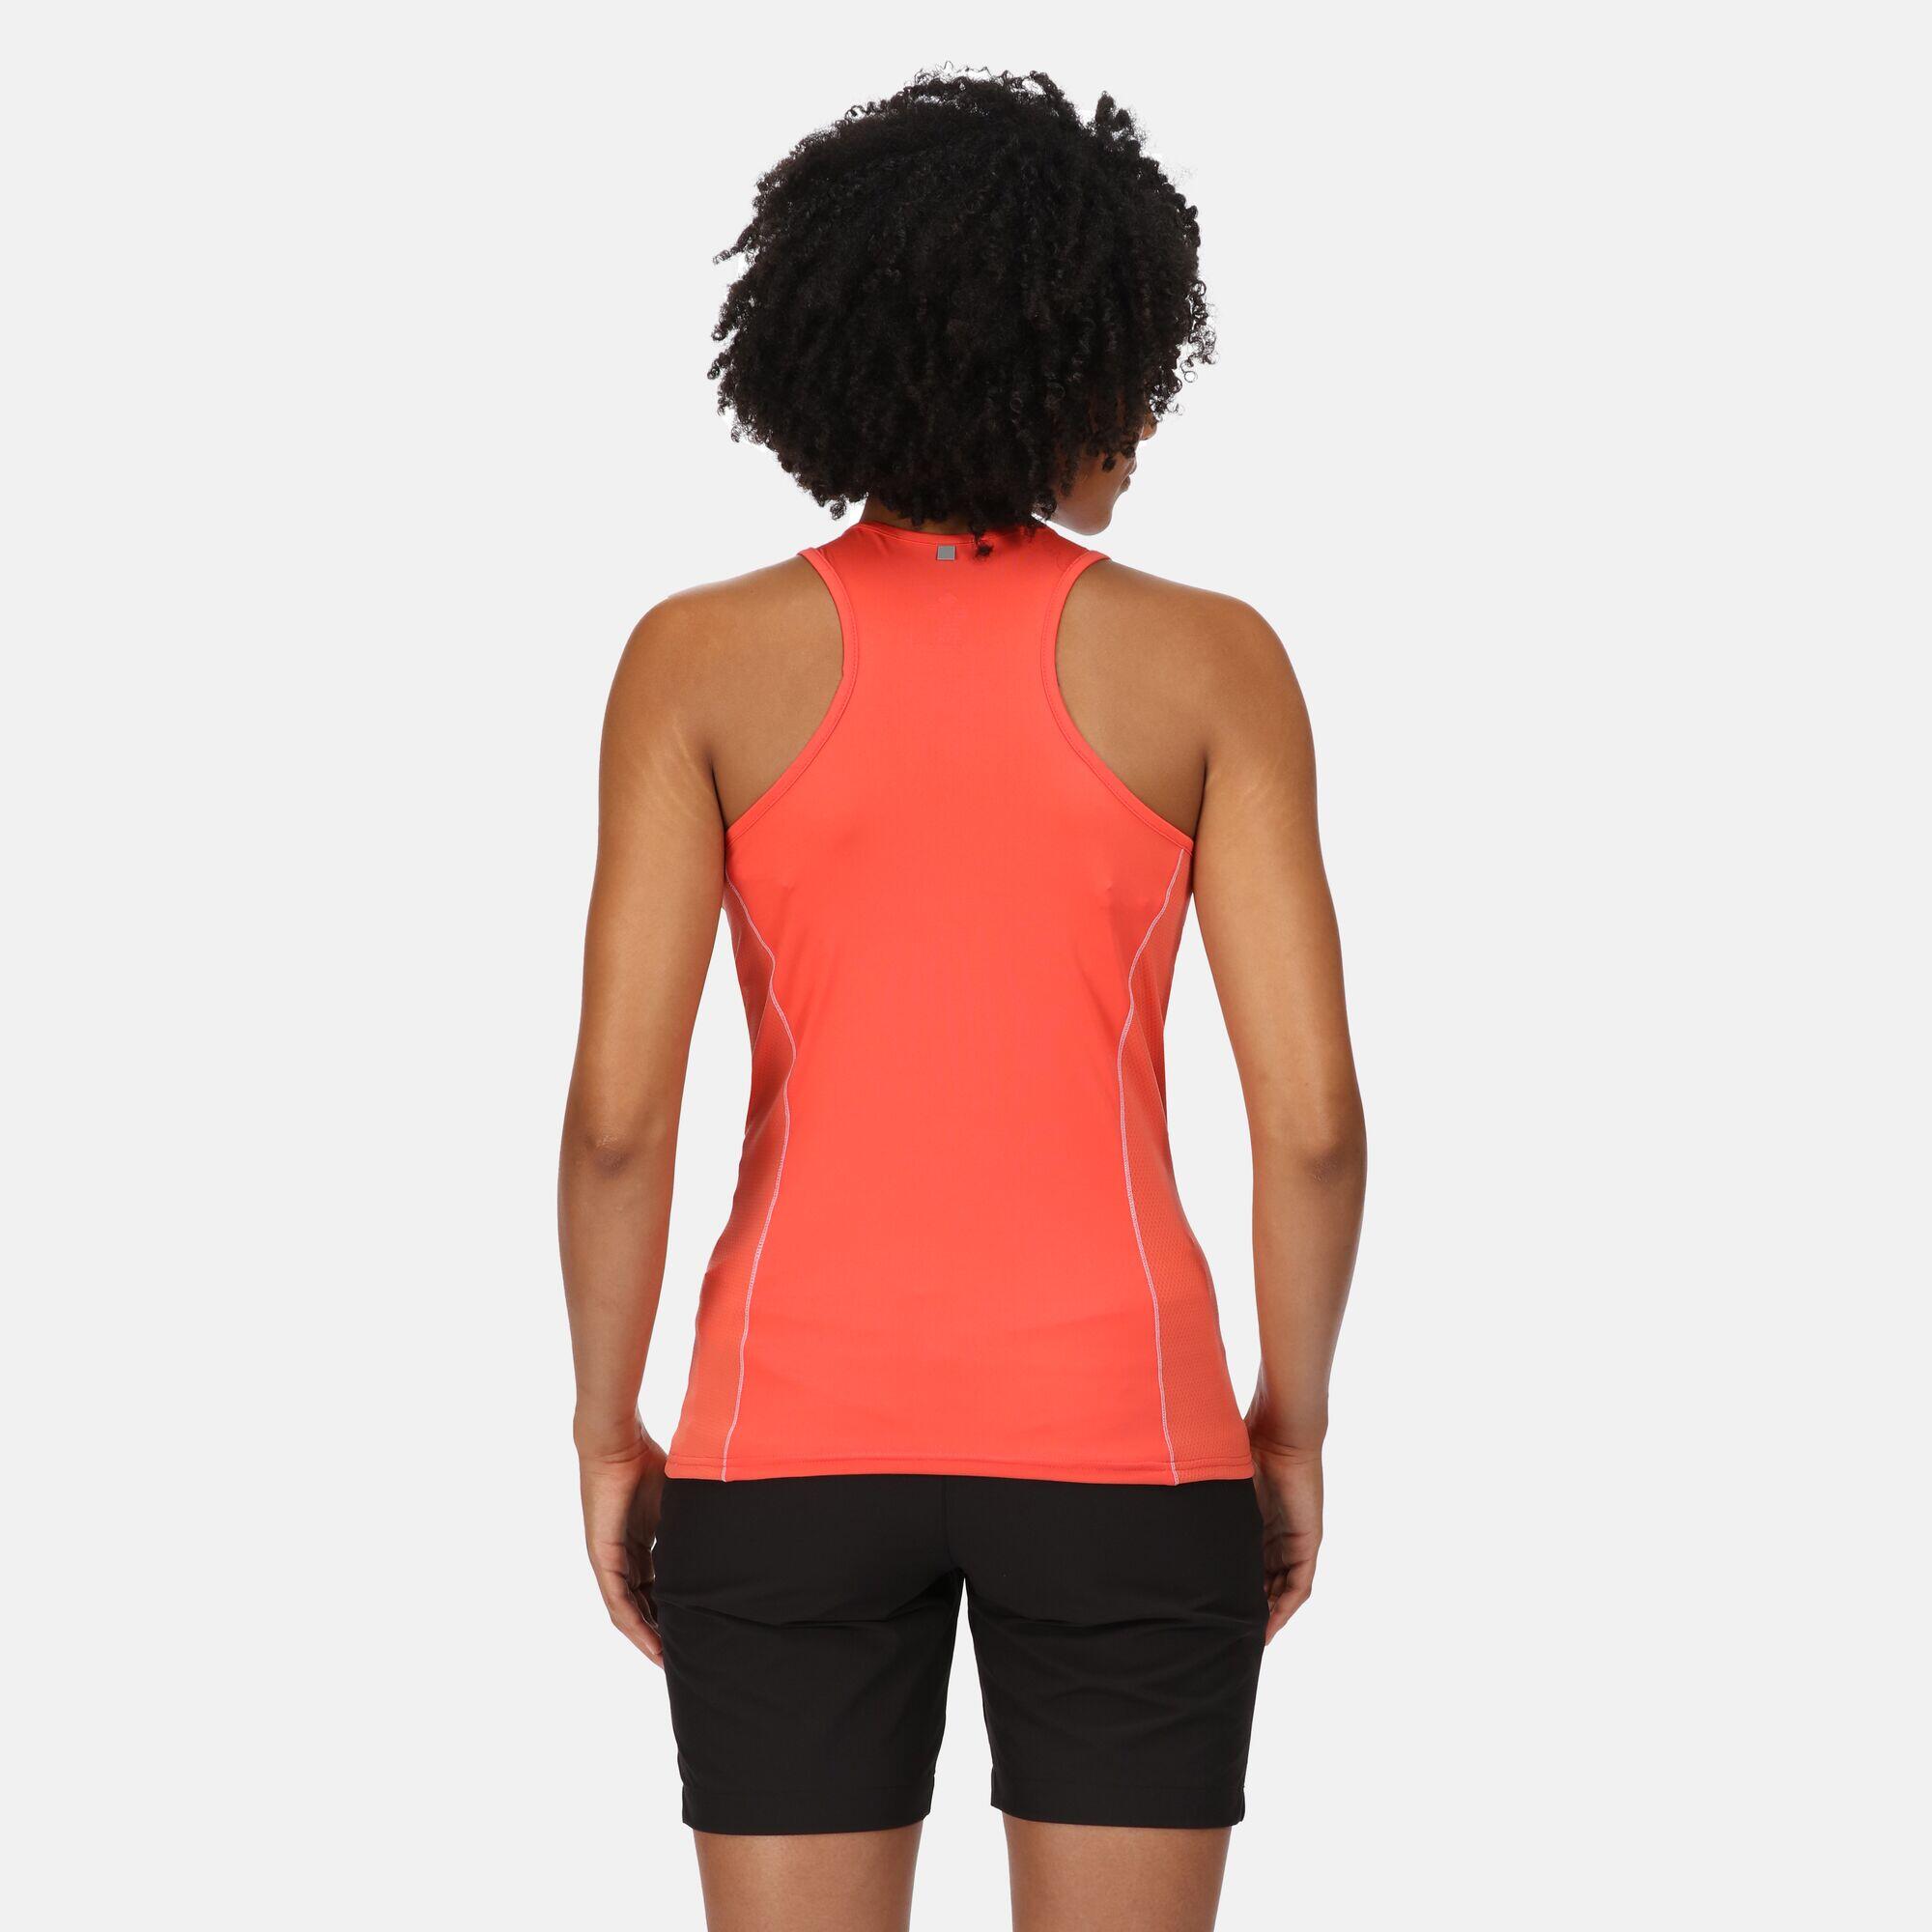 Varey Women's Fitness Gym Vest - Neon Peach 2/5